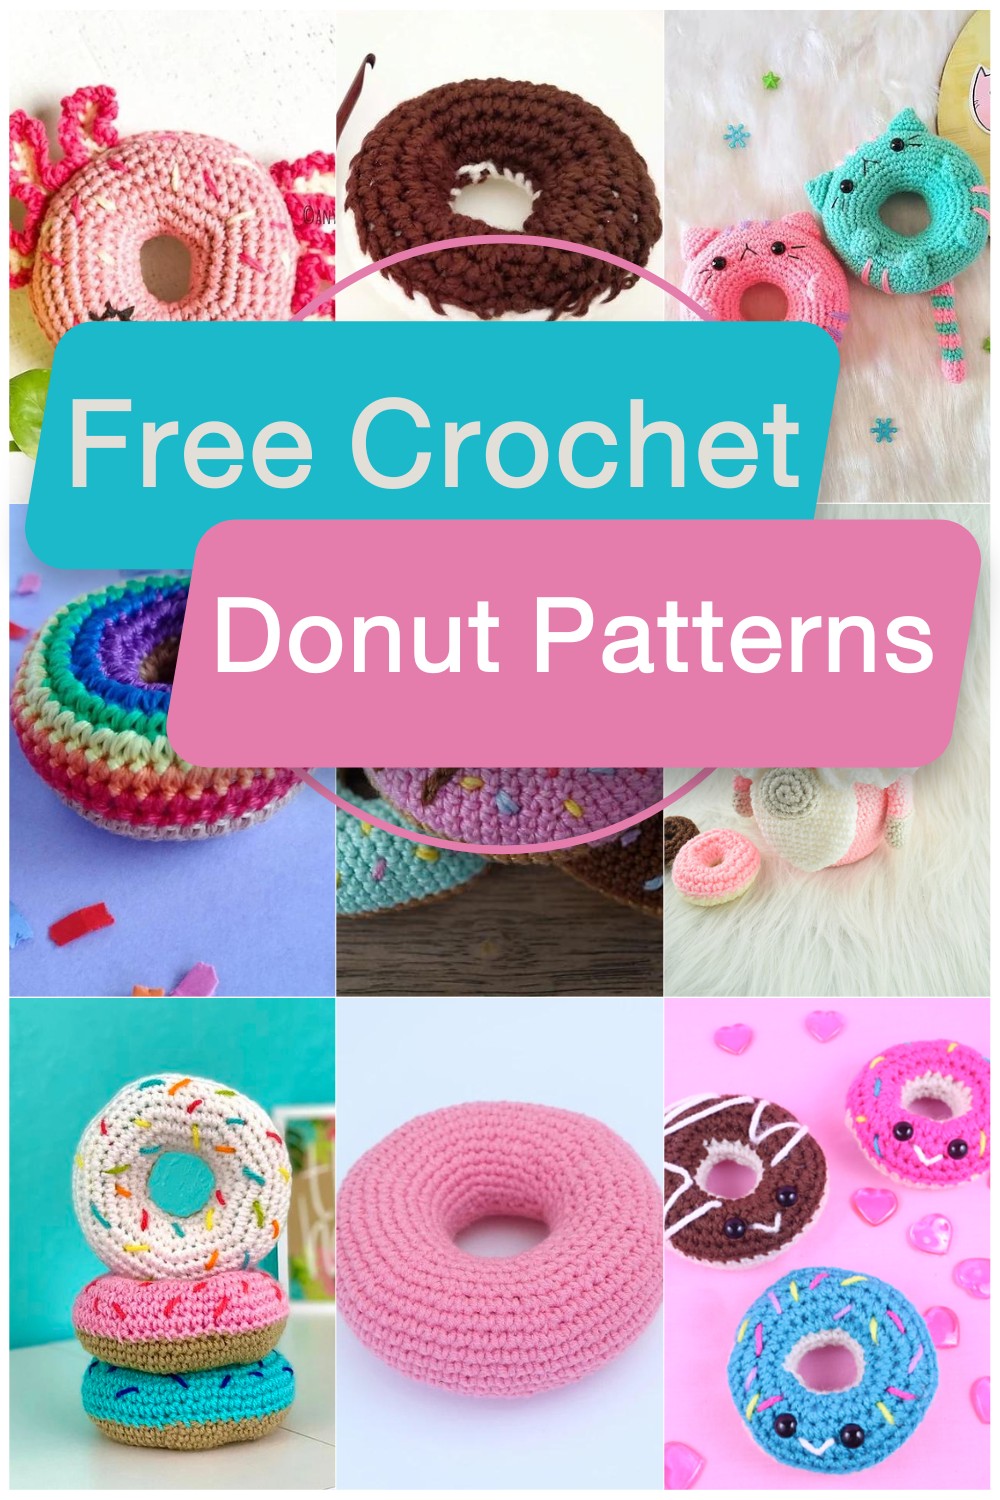 Free Crochet Donut Patterns